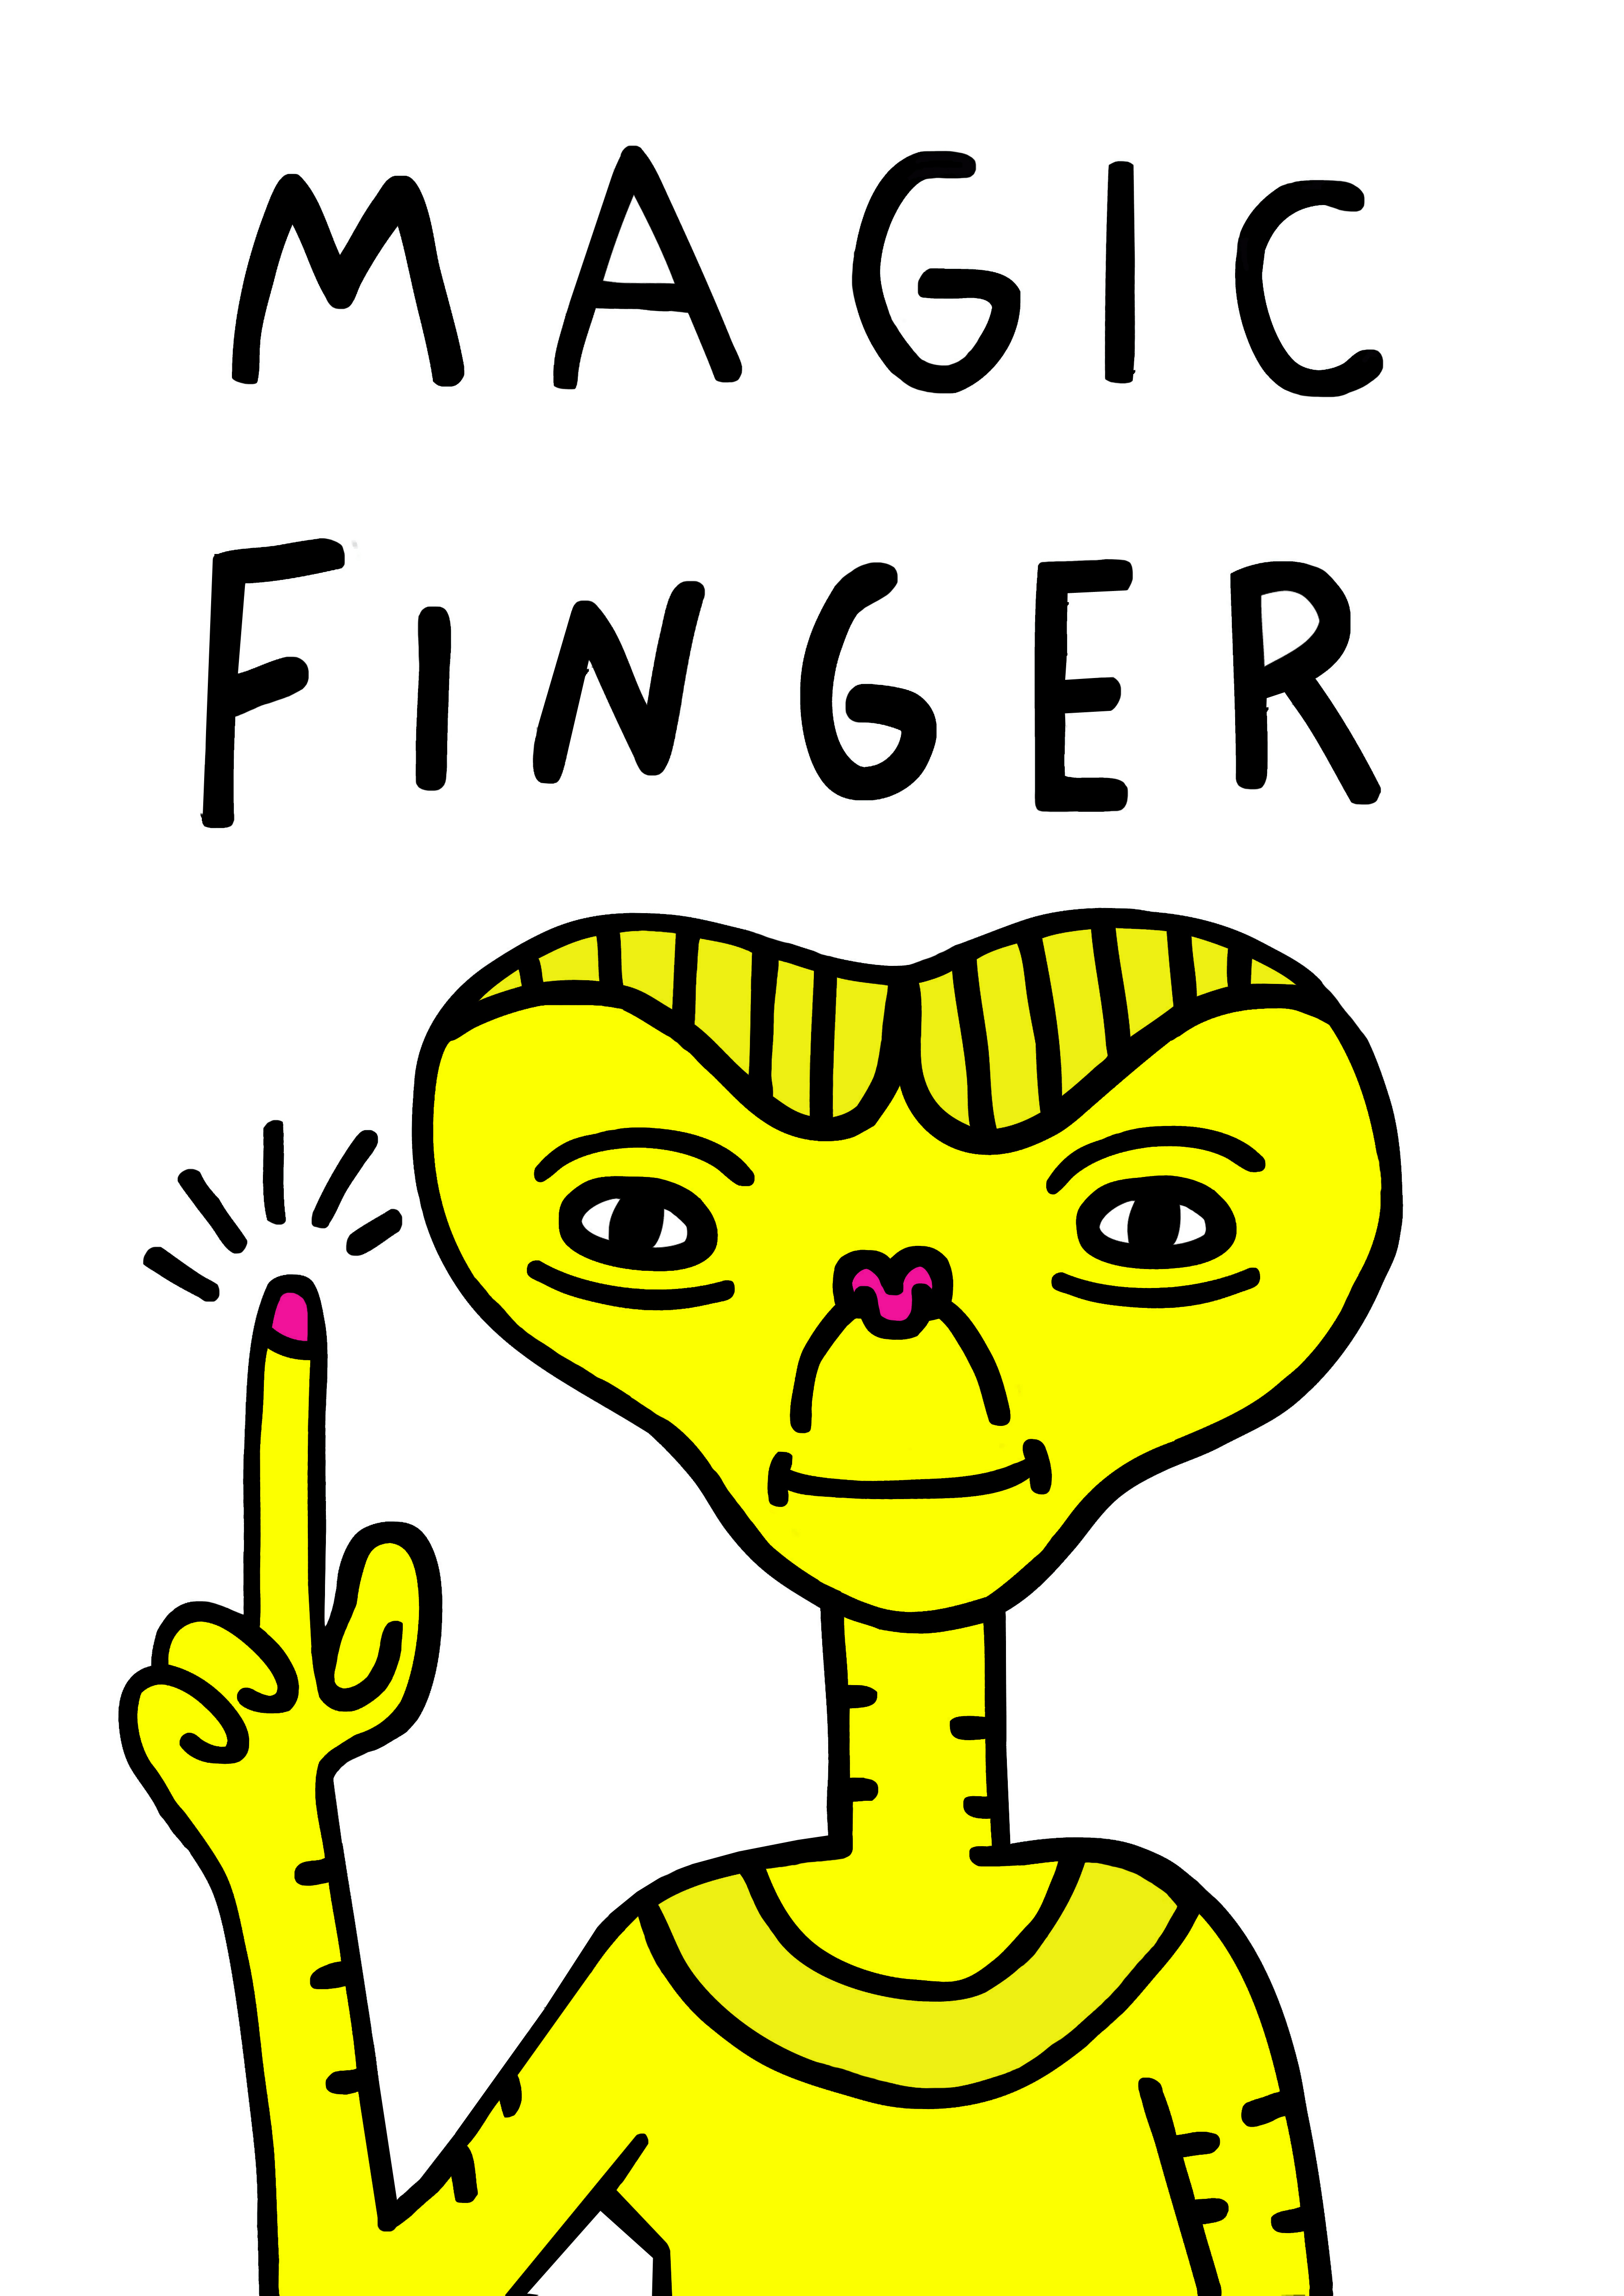  Magic  Finger  Roy Draws Stopwatch Gallery